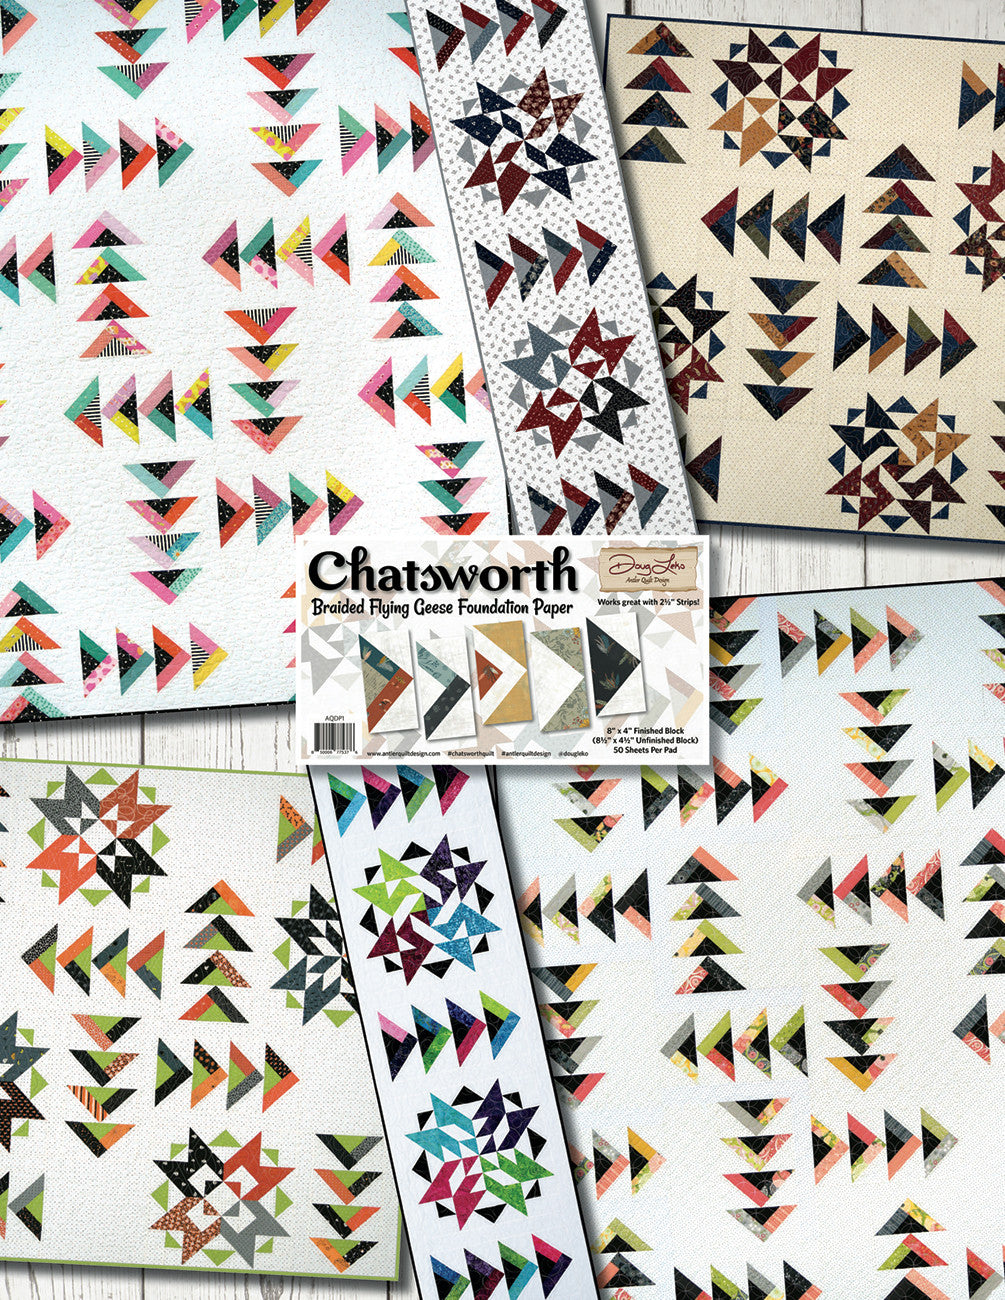 Chatsworth Quilt Pattern Book by Doug Leko of Antler Quilt Designs